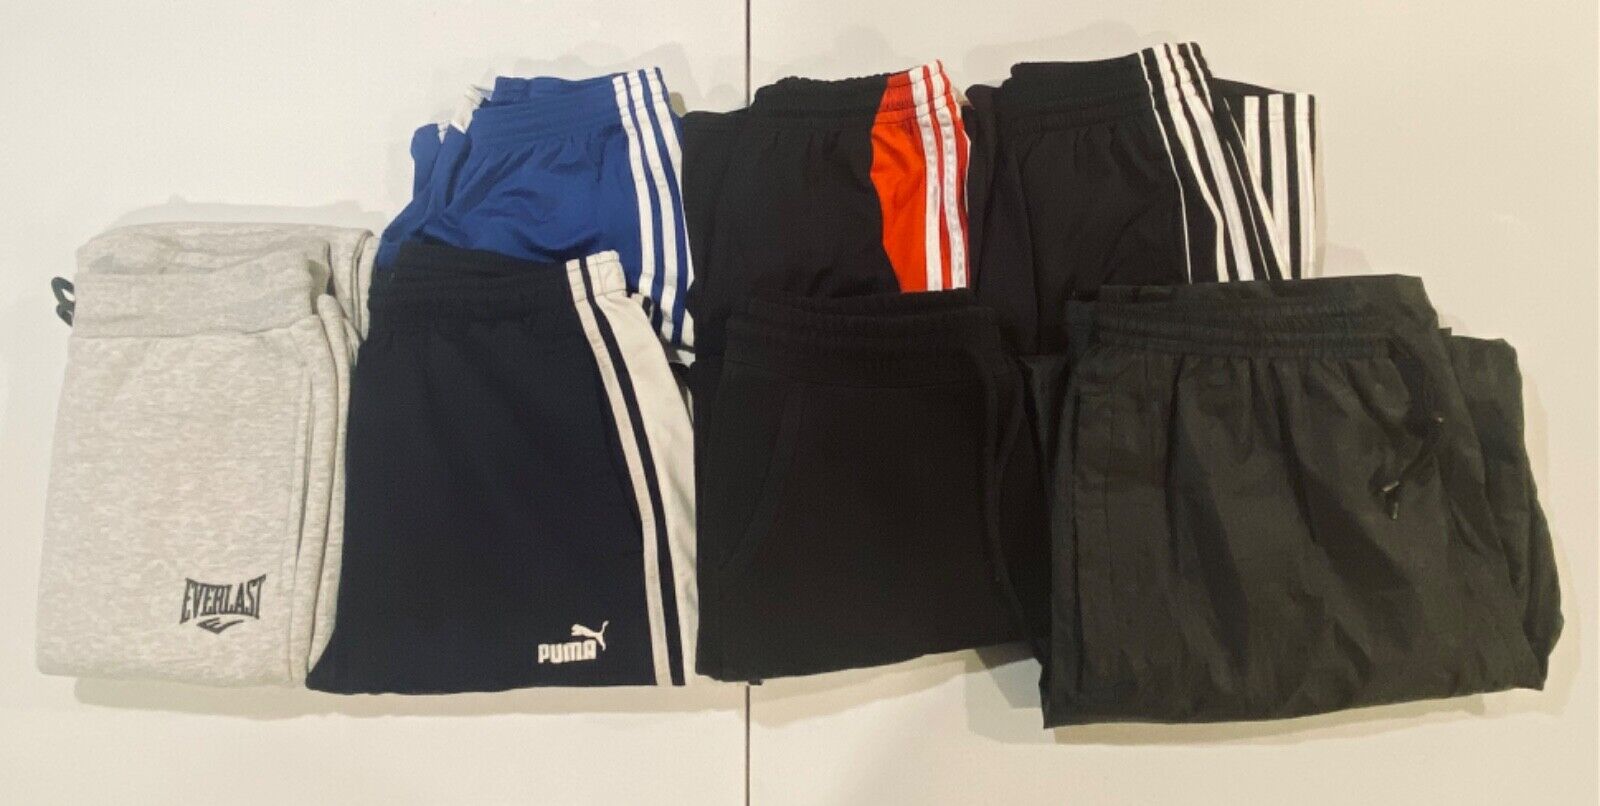 Super sale period limited Mens Vintage Pants 67% OFF of fixed price & shorts Adidas Everlast Puma lot. Bundle